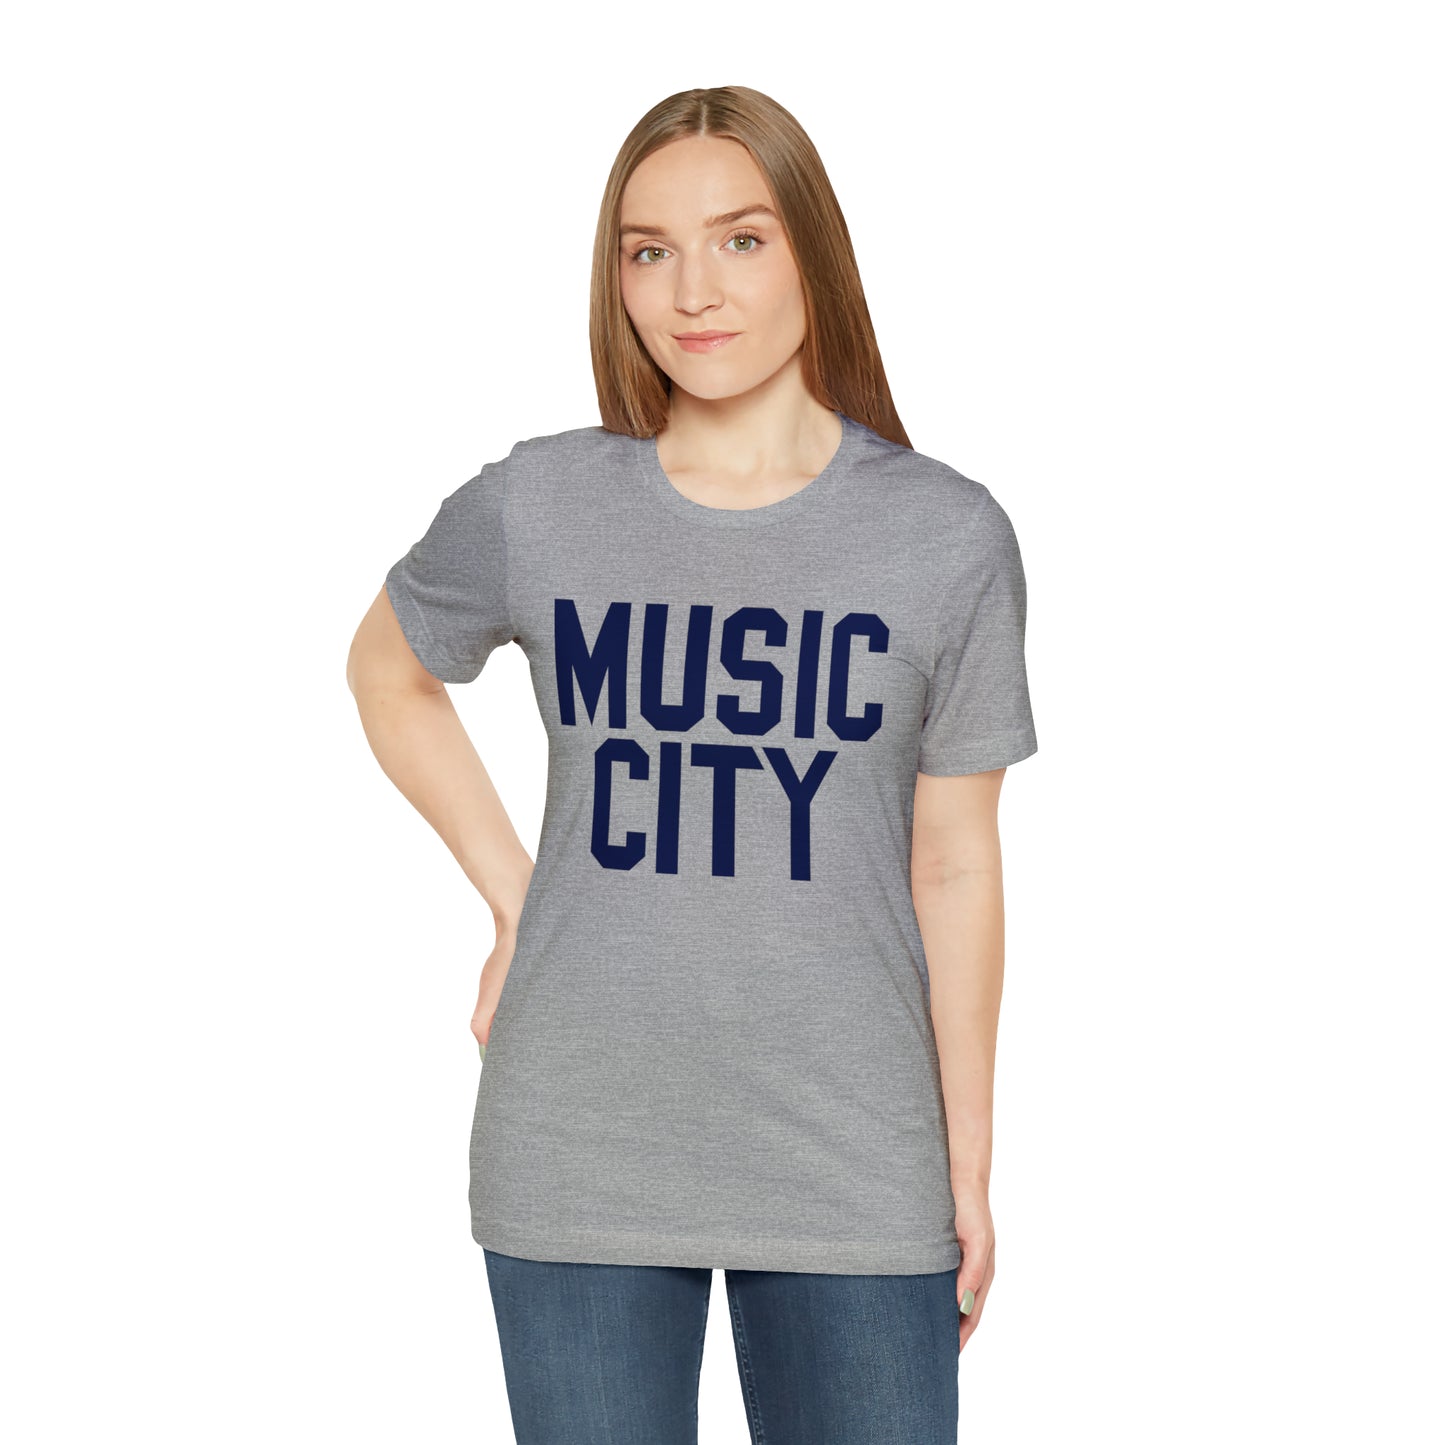 Music City  Men's T-shirt